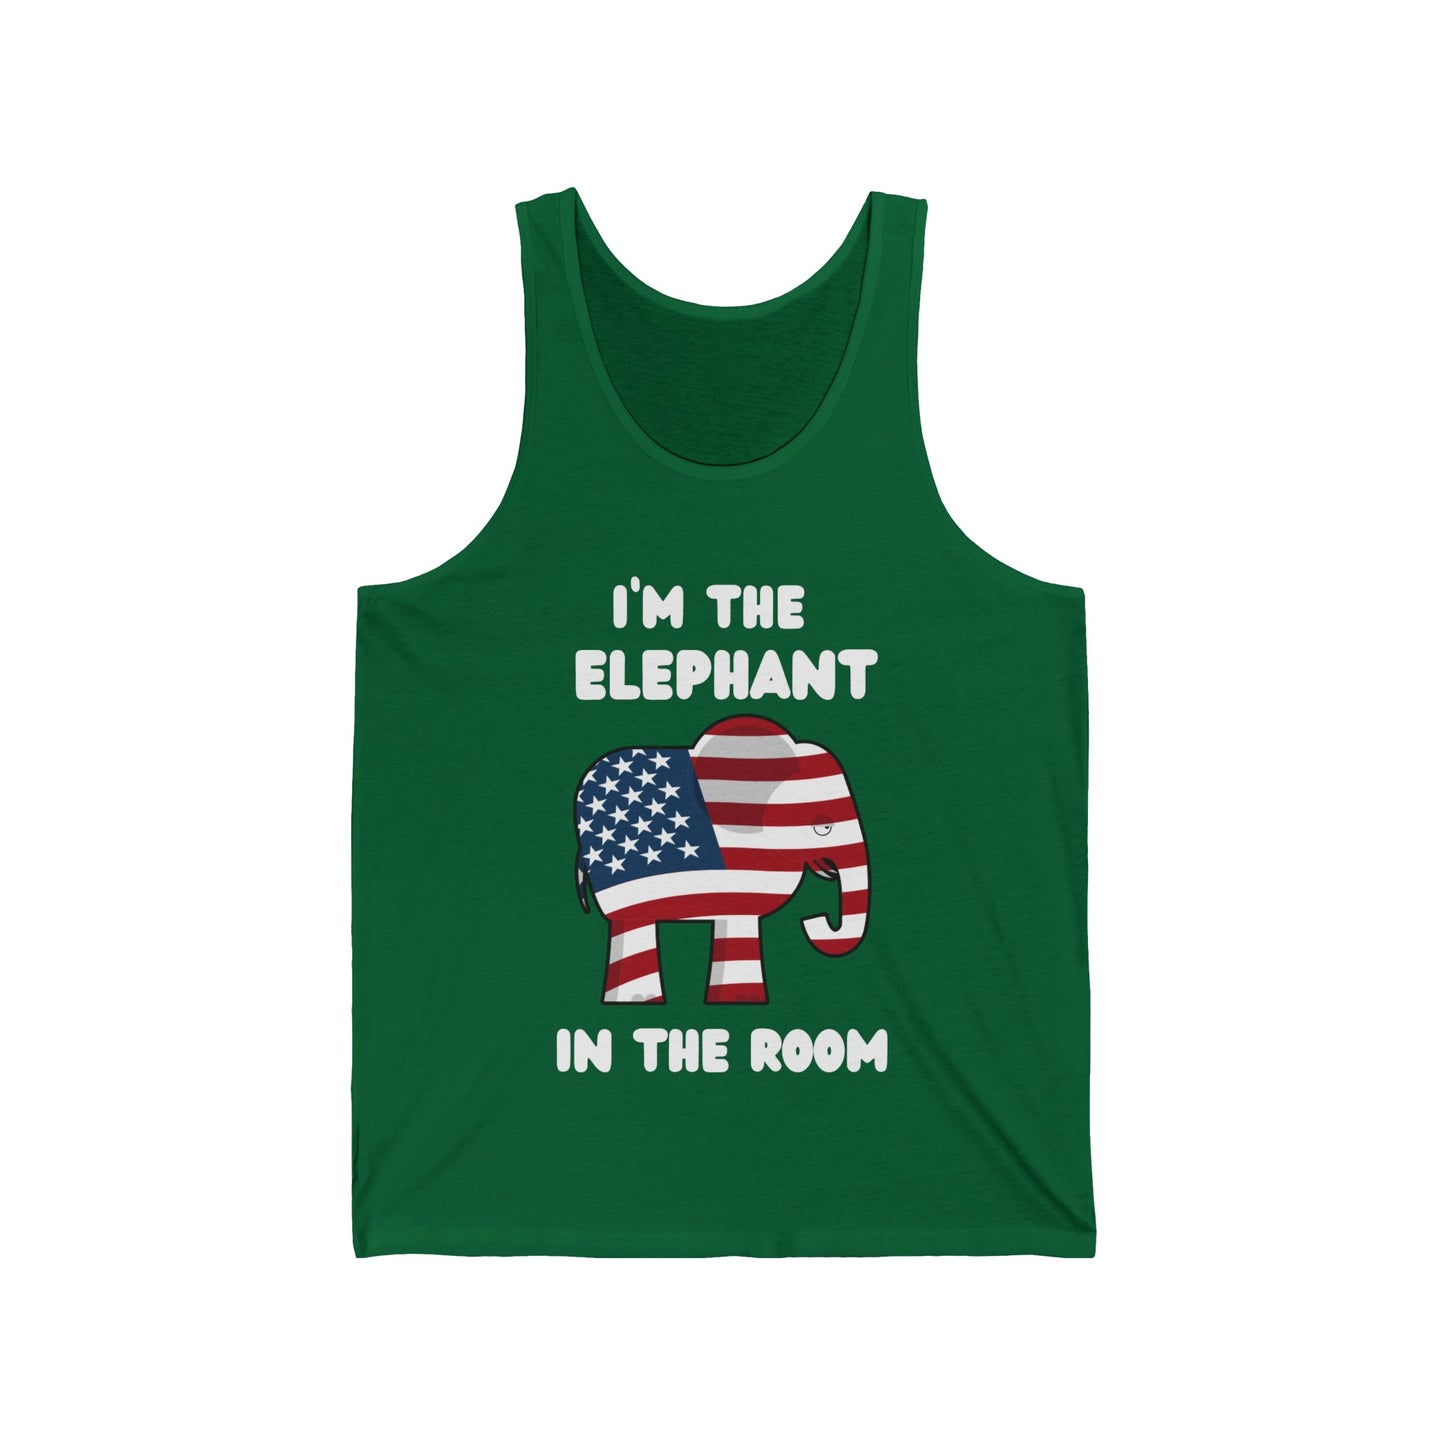 Elephant in Room Cartoon Women's Relaxed Tank (White Logo)